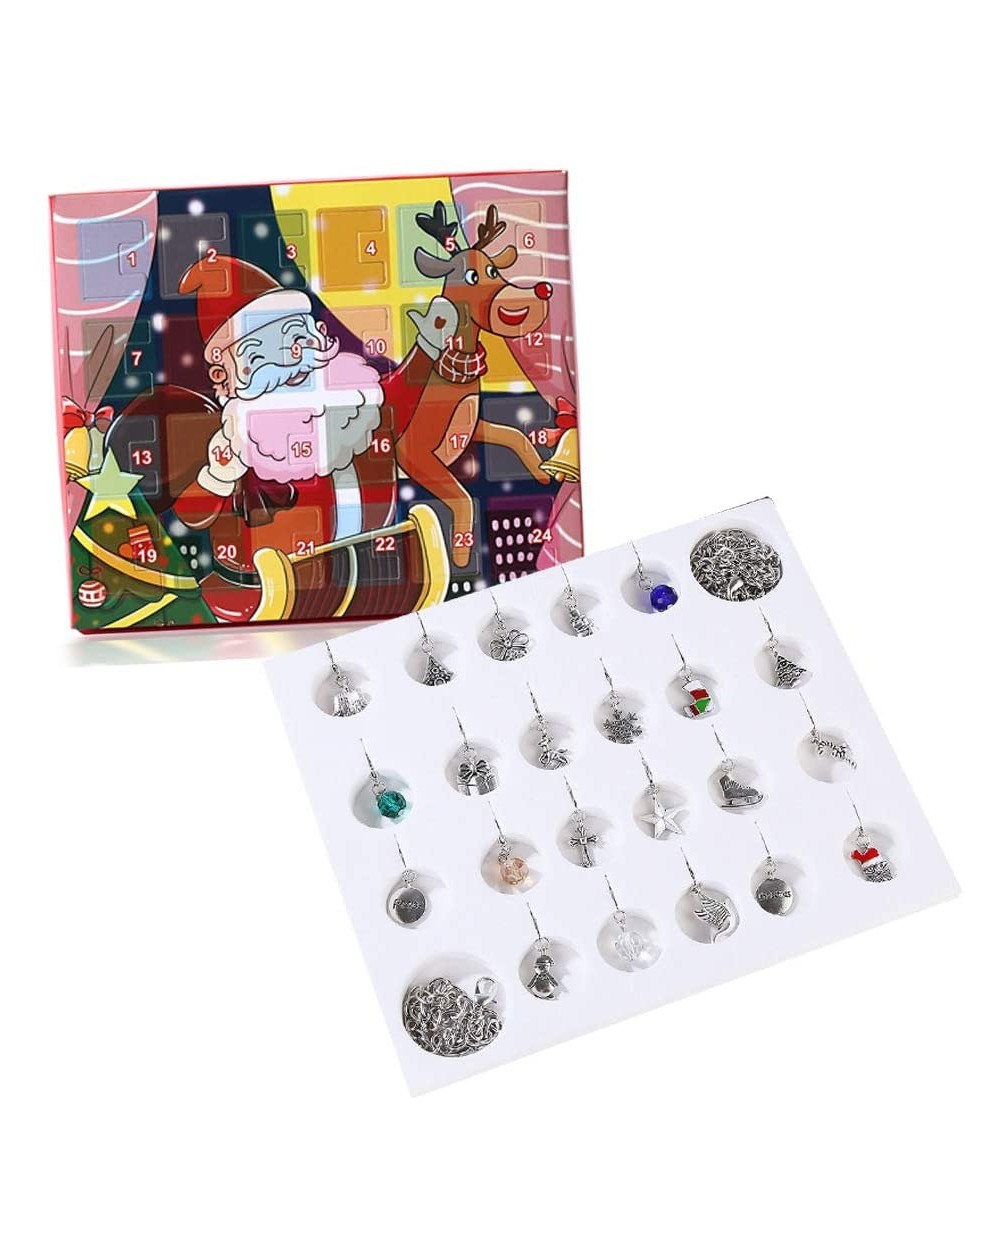 Advent Calendars Advent Calendar 2020 Christmas DIY Charm Bracelet Fashion Jewelry Beads Hand Chain Advent Calendars for Kids...